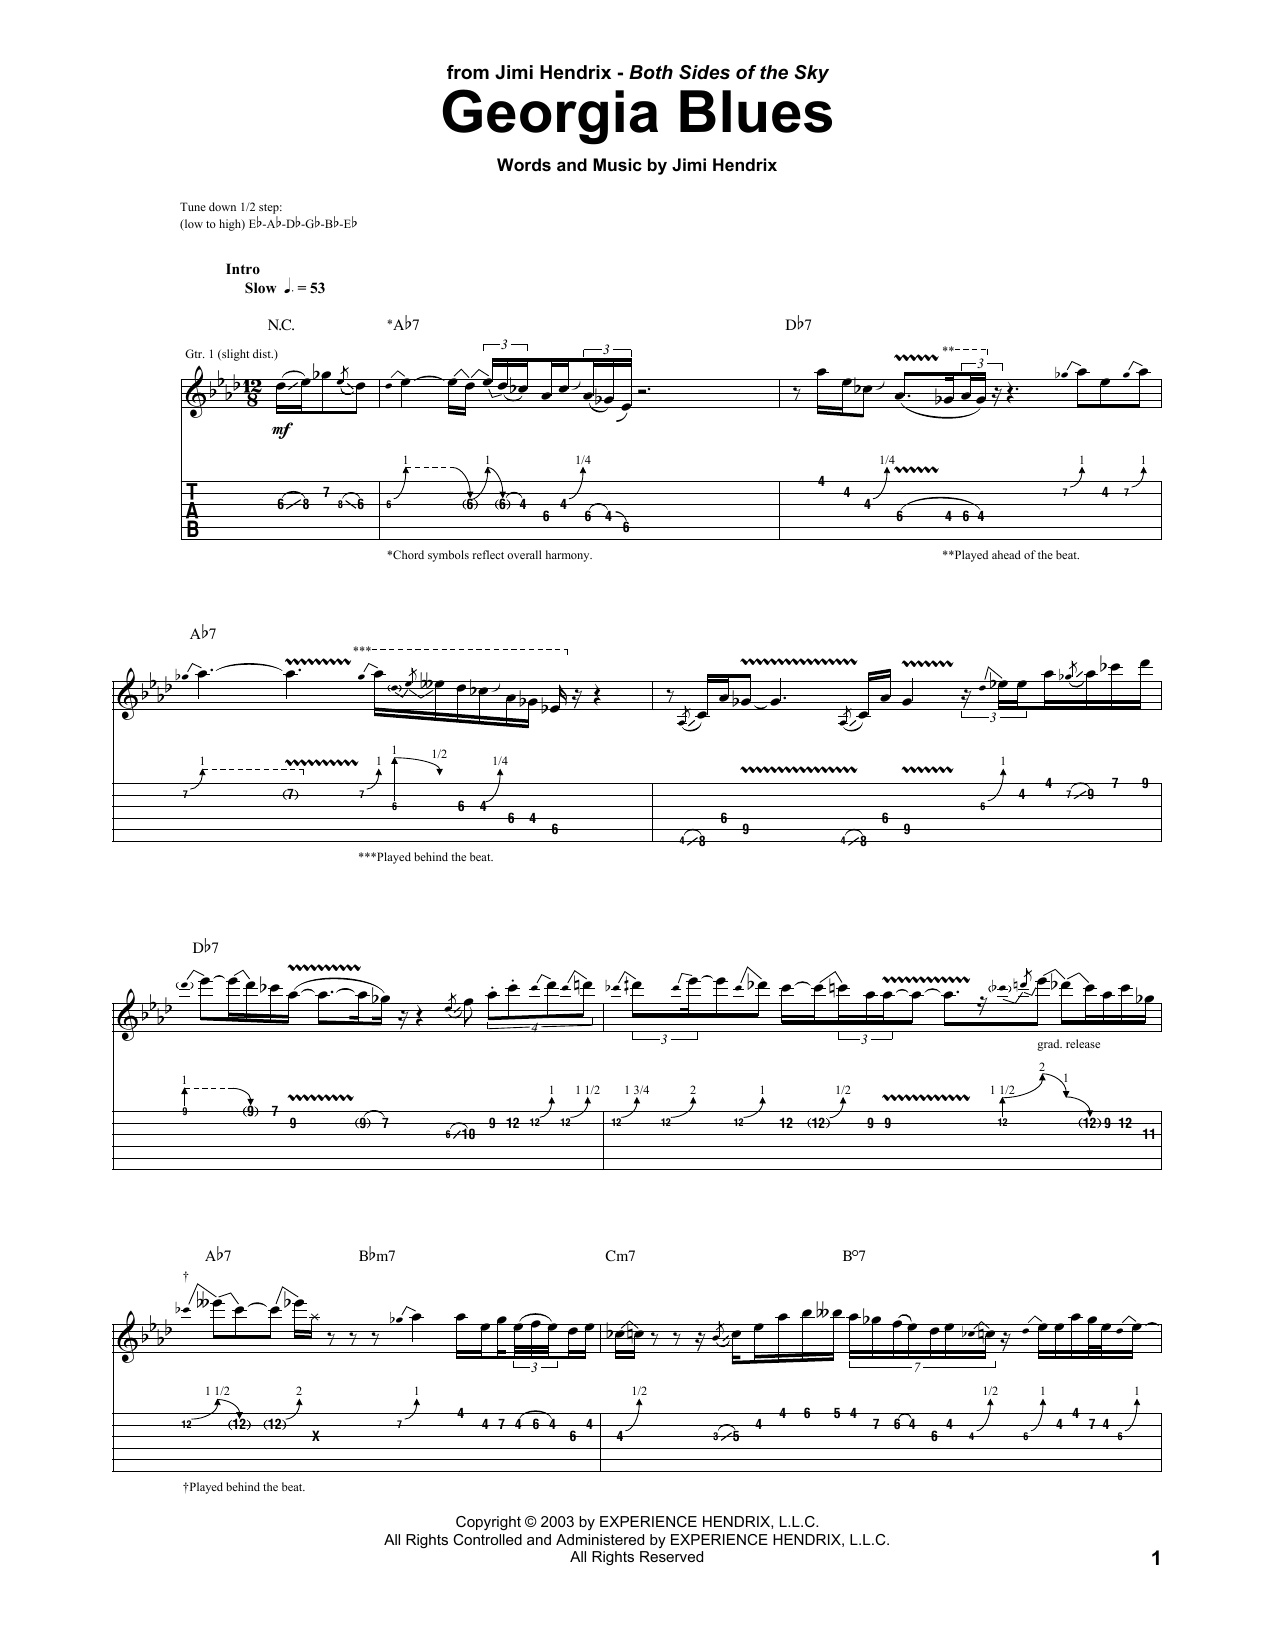 Jimi Hendrix Georgia Blues Sheet Music Notes & Chords for Guitar Tab - Download or Print PDF